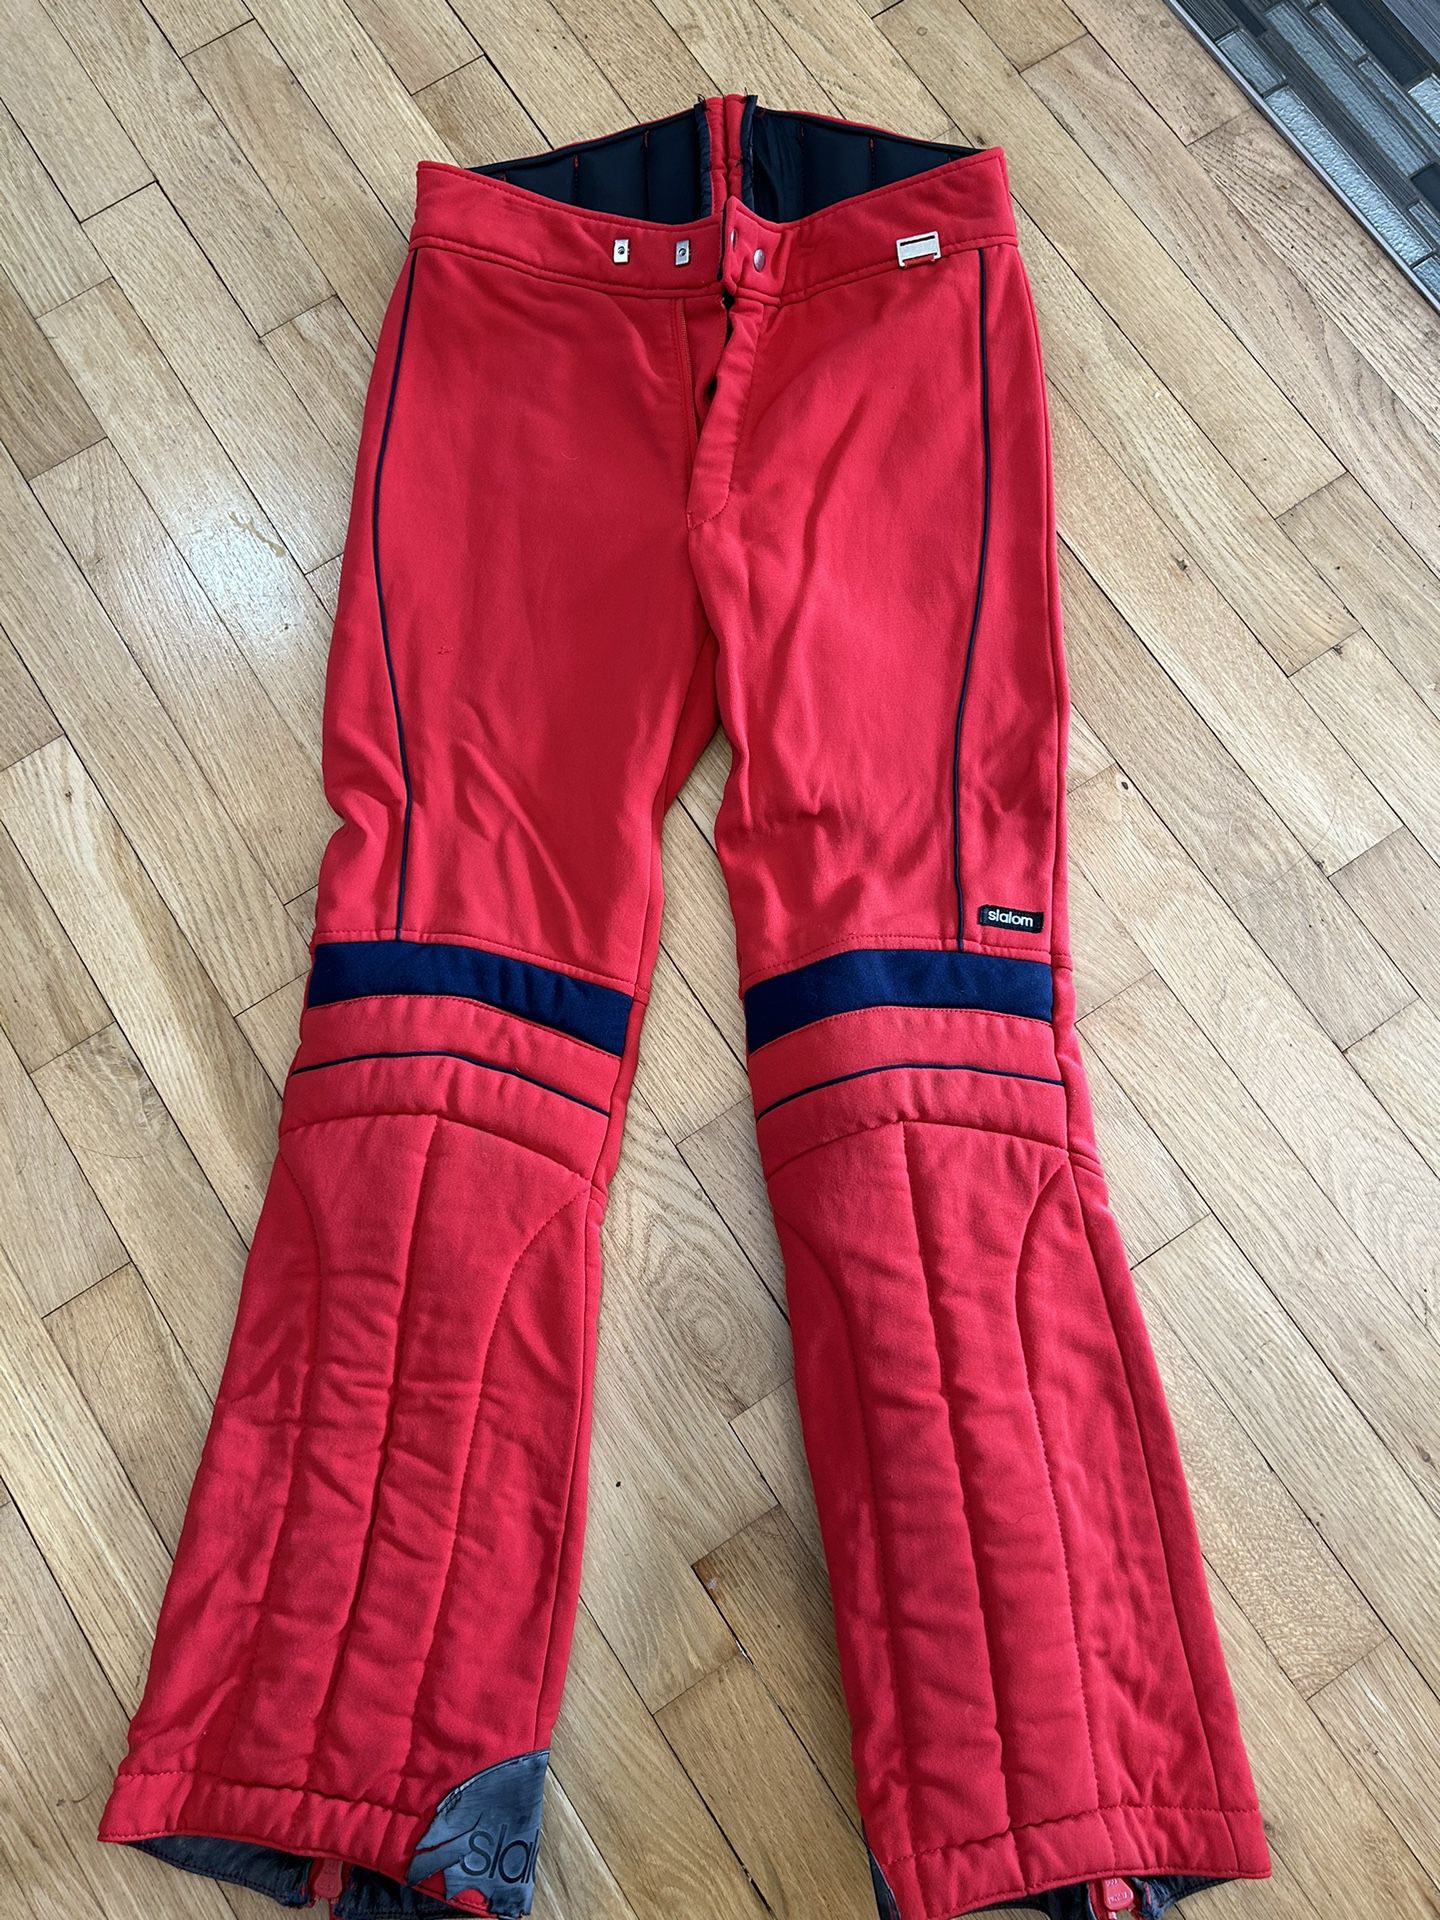 Slalom Snow Pants Men’s 30R/women’s Size 6, Padded Knees